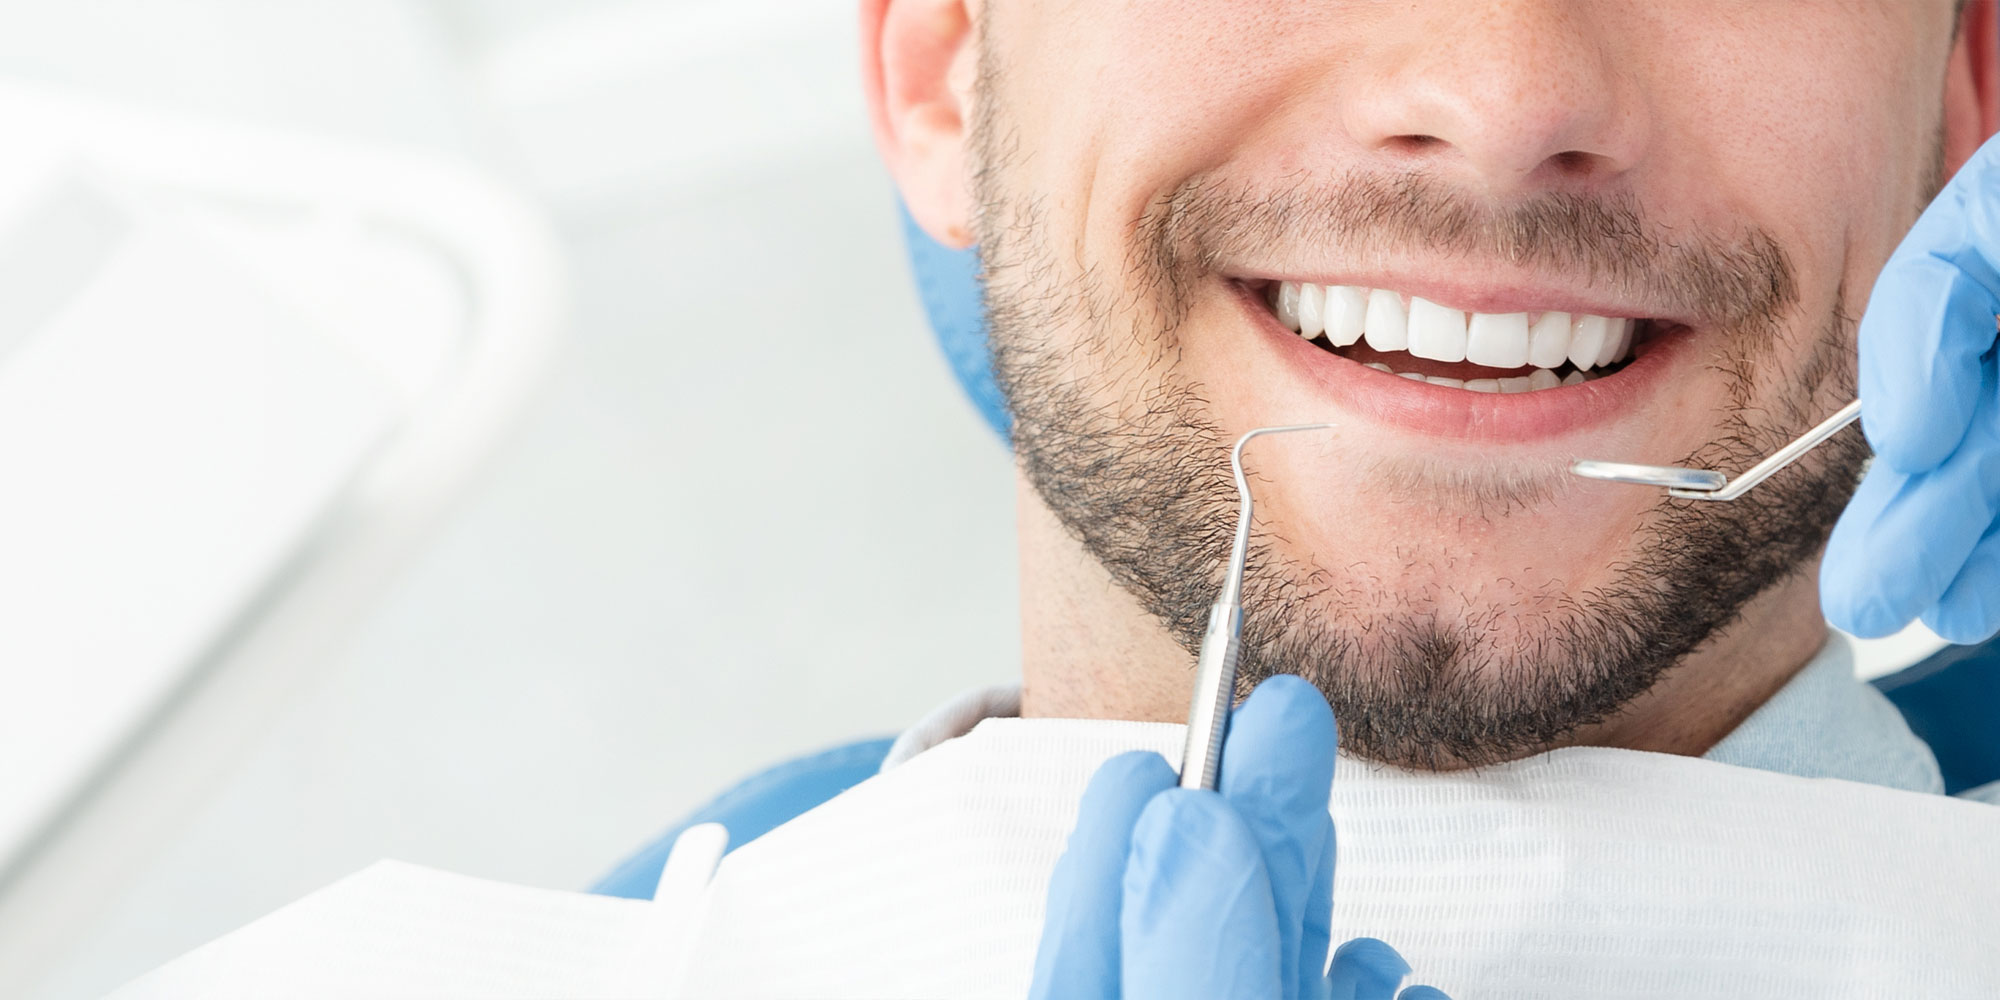 Buffalo Emergency Dentist – 24 Hour Dental Services